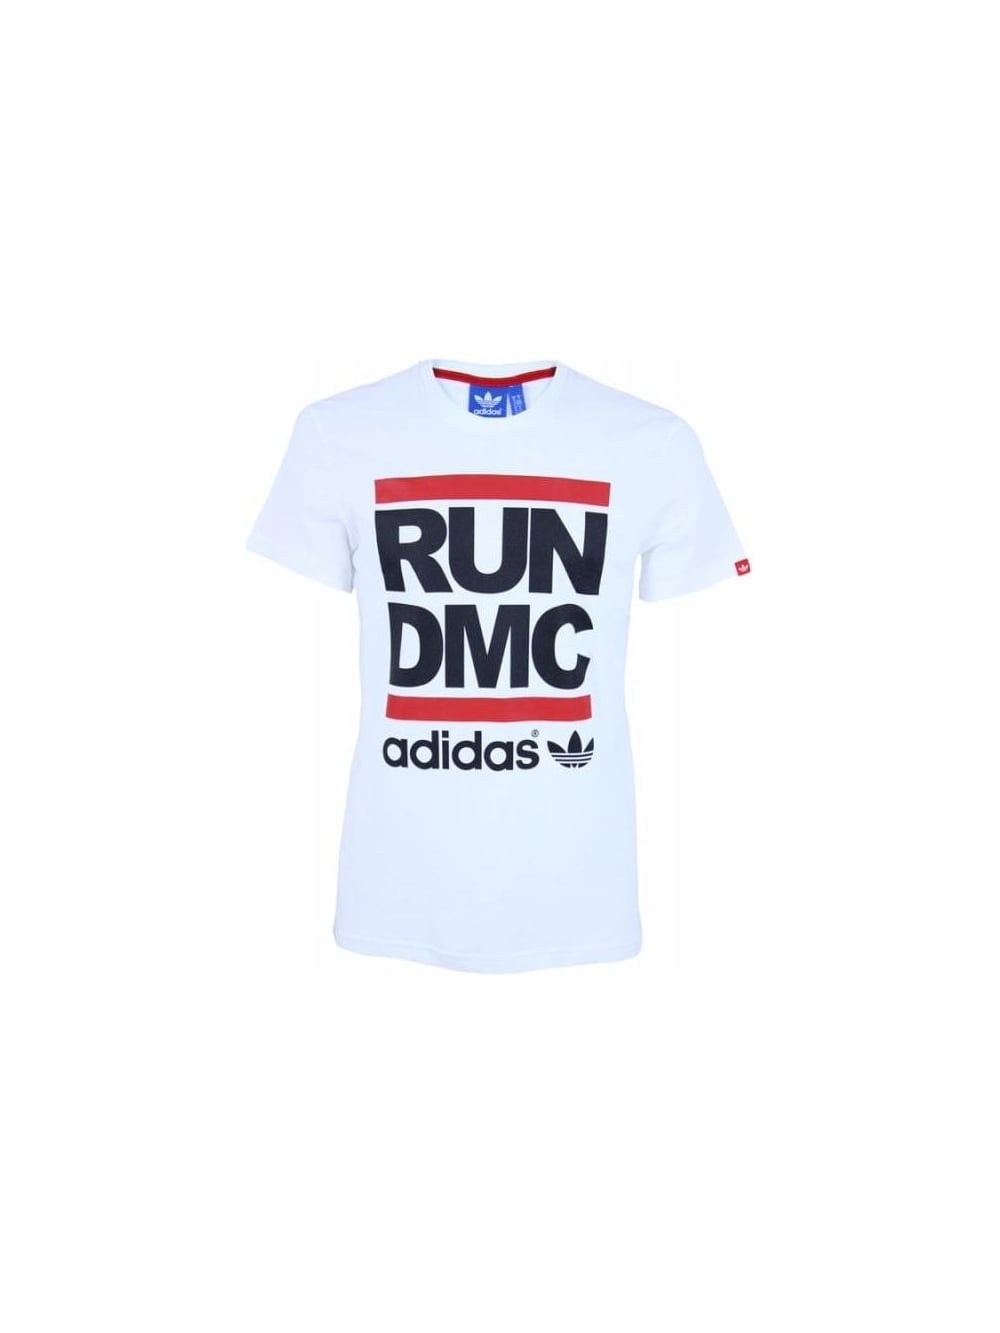 DMC Logo - Adidas Originals X Run DMC Logo T Shirt in White - Northern Threads